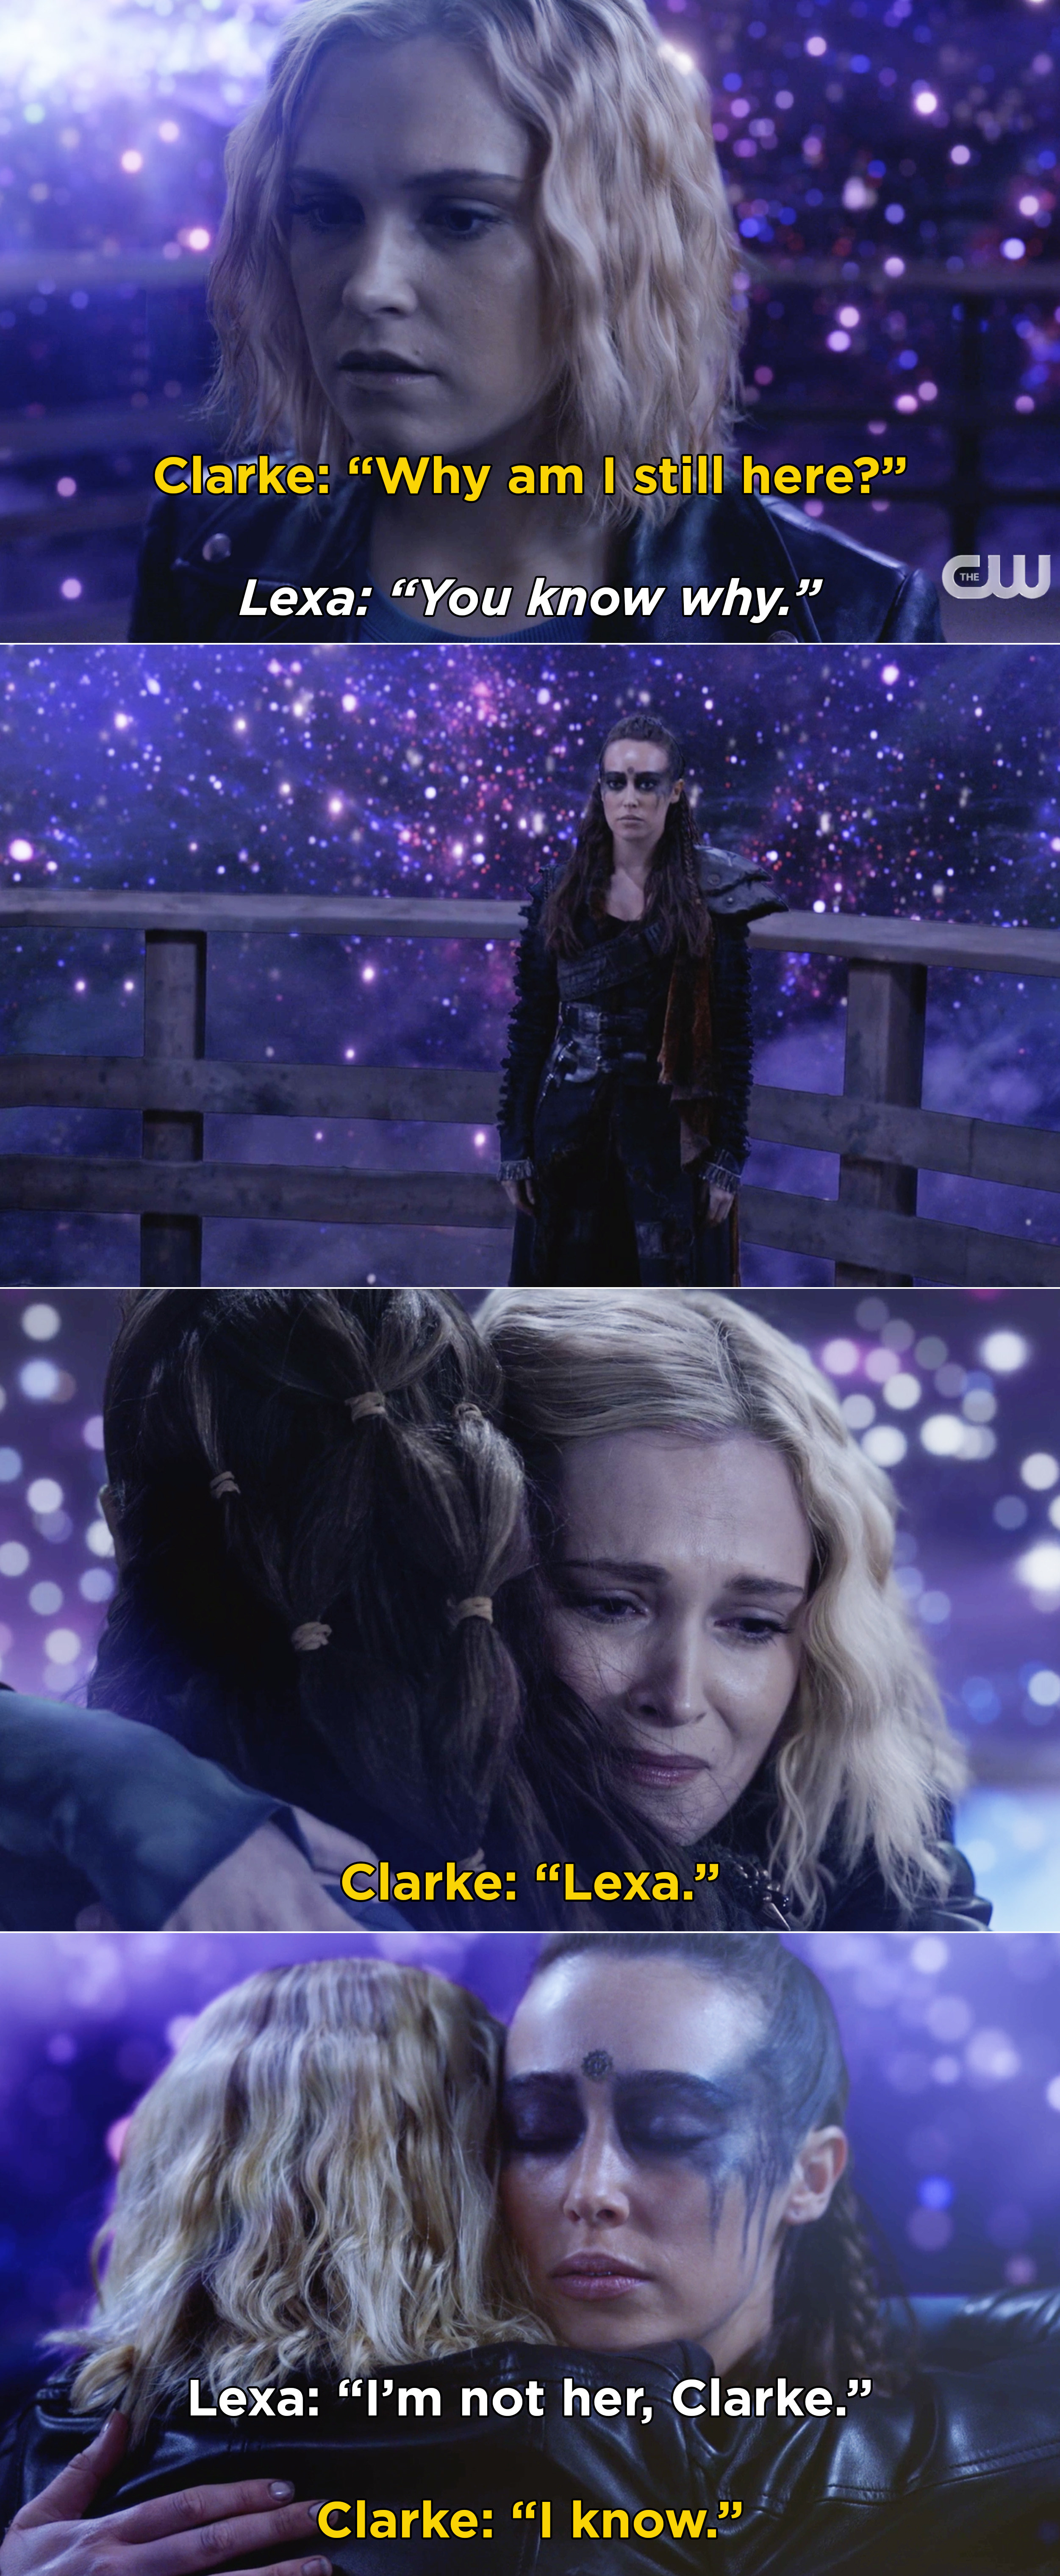 Clarke and Lexa hugging